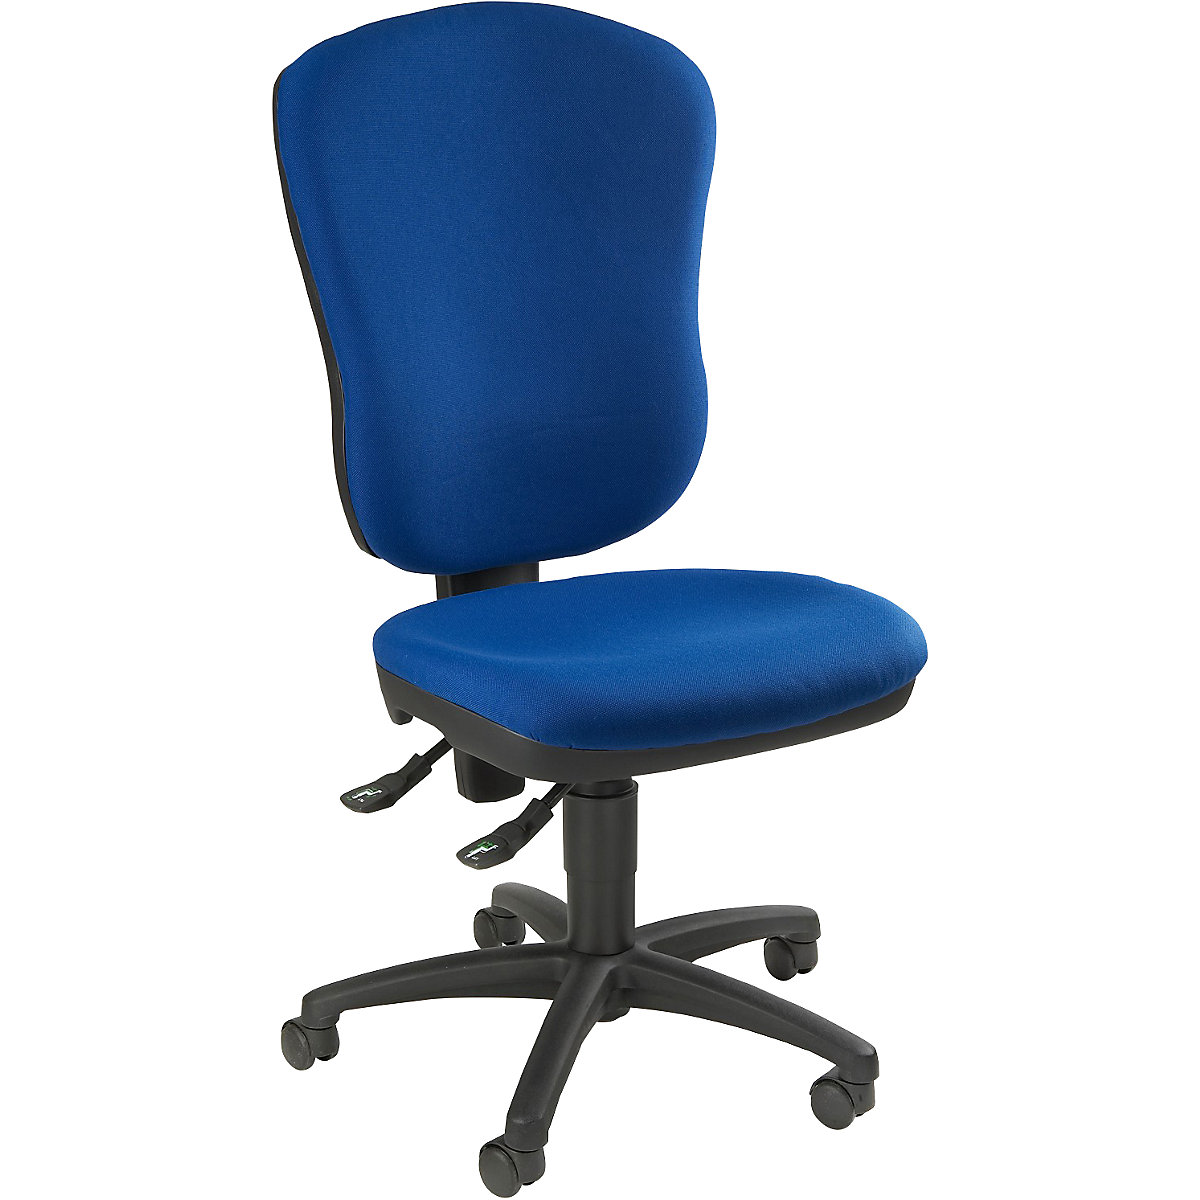 Štandardná otočná stolička – Topstar, bez lakťových opierok, s opierkou bedrových stavcov, výška operadla 570 mm, poťah kráľovská modrá-1